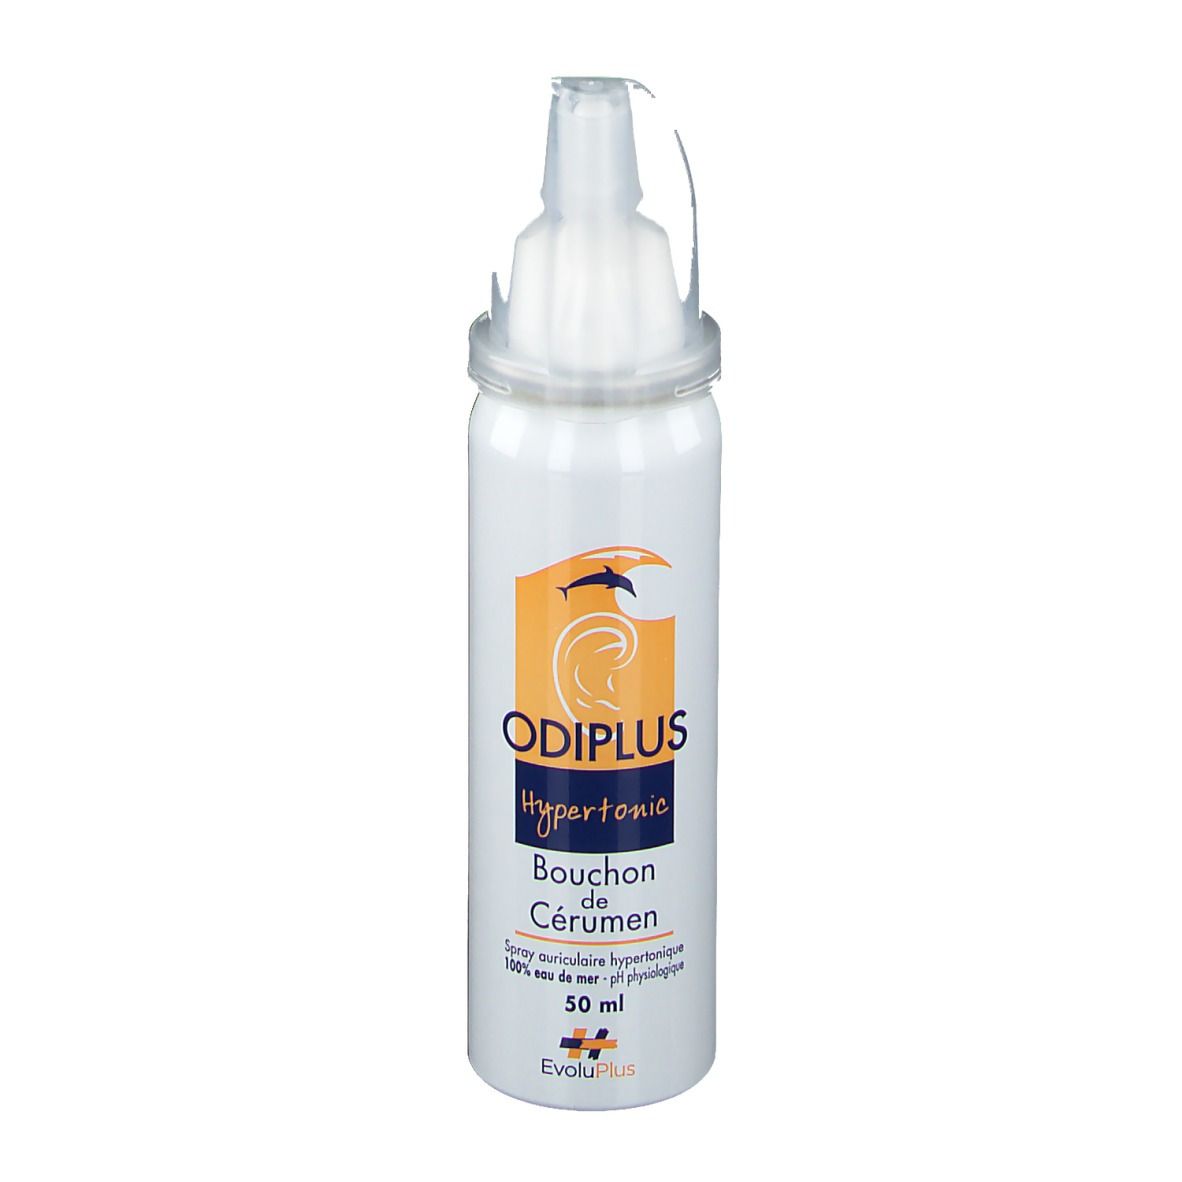 Odiplus® Spray auriculaire hypertonique